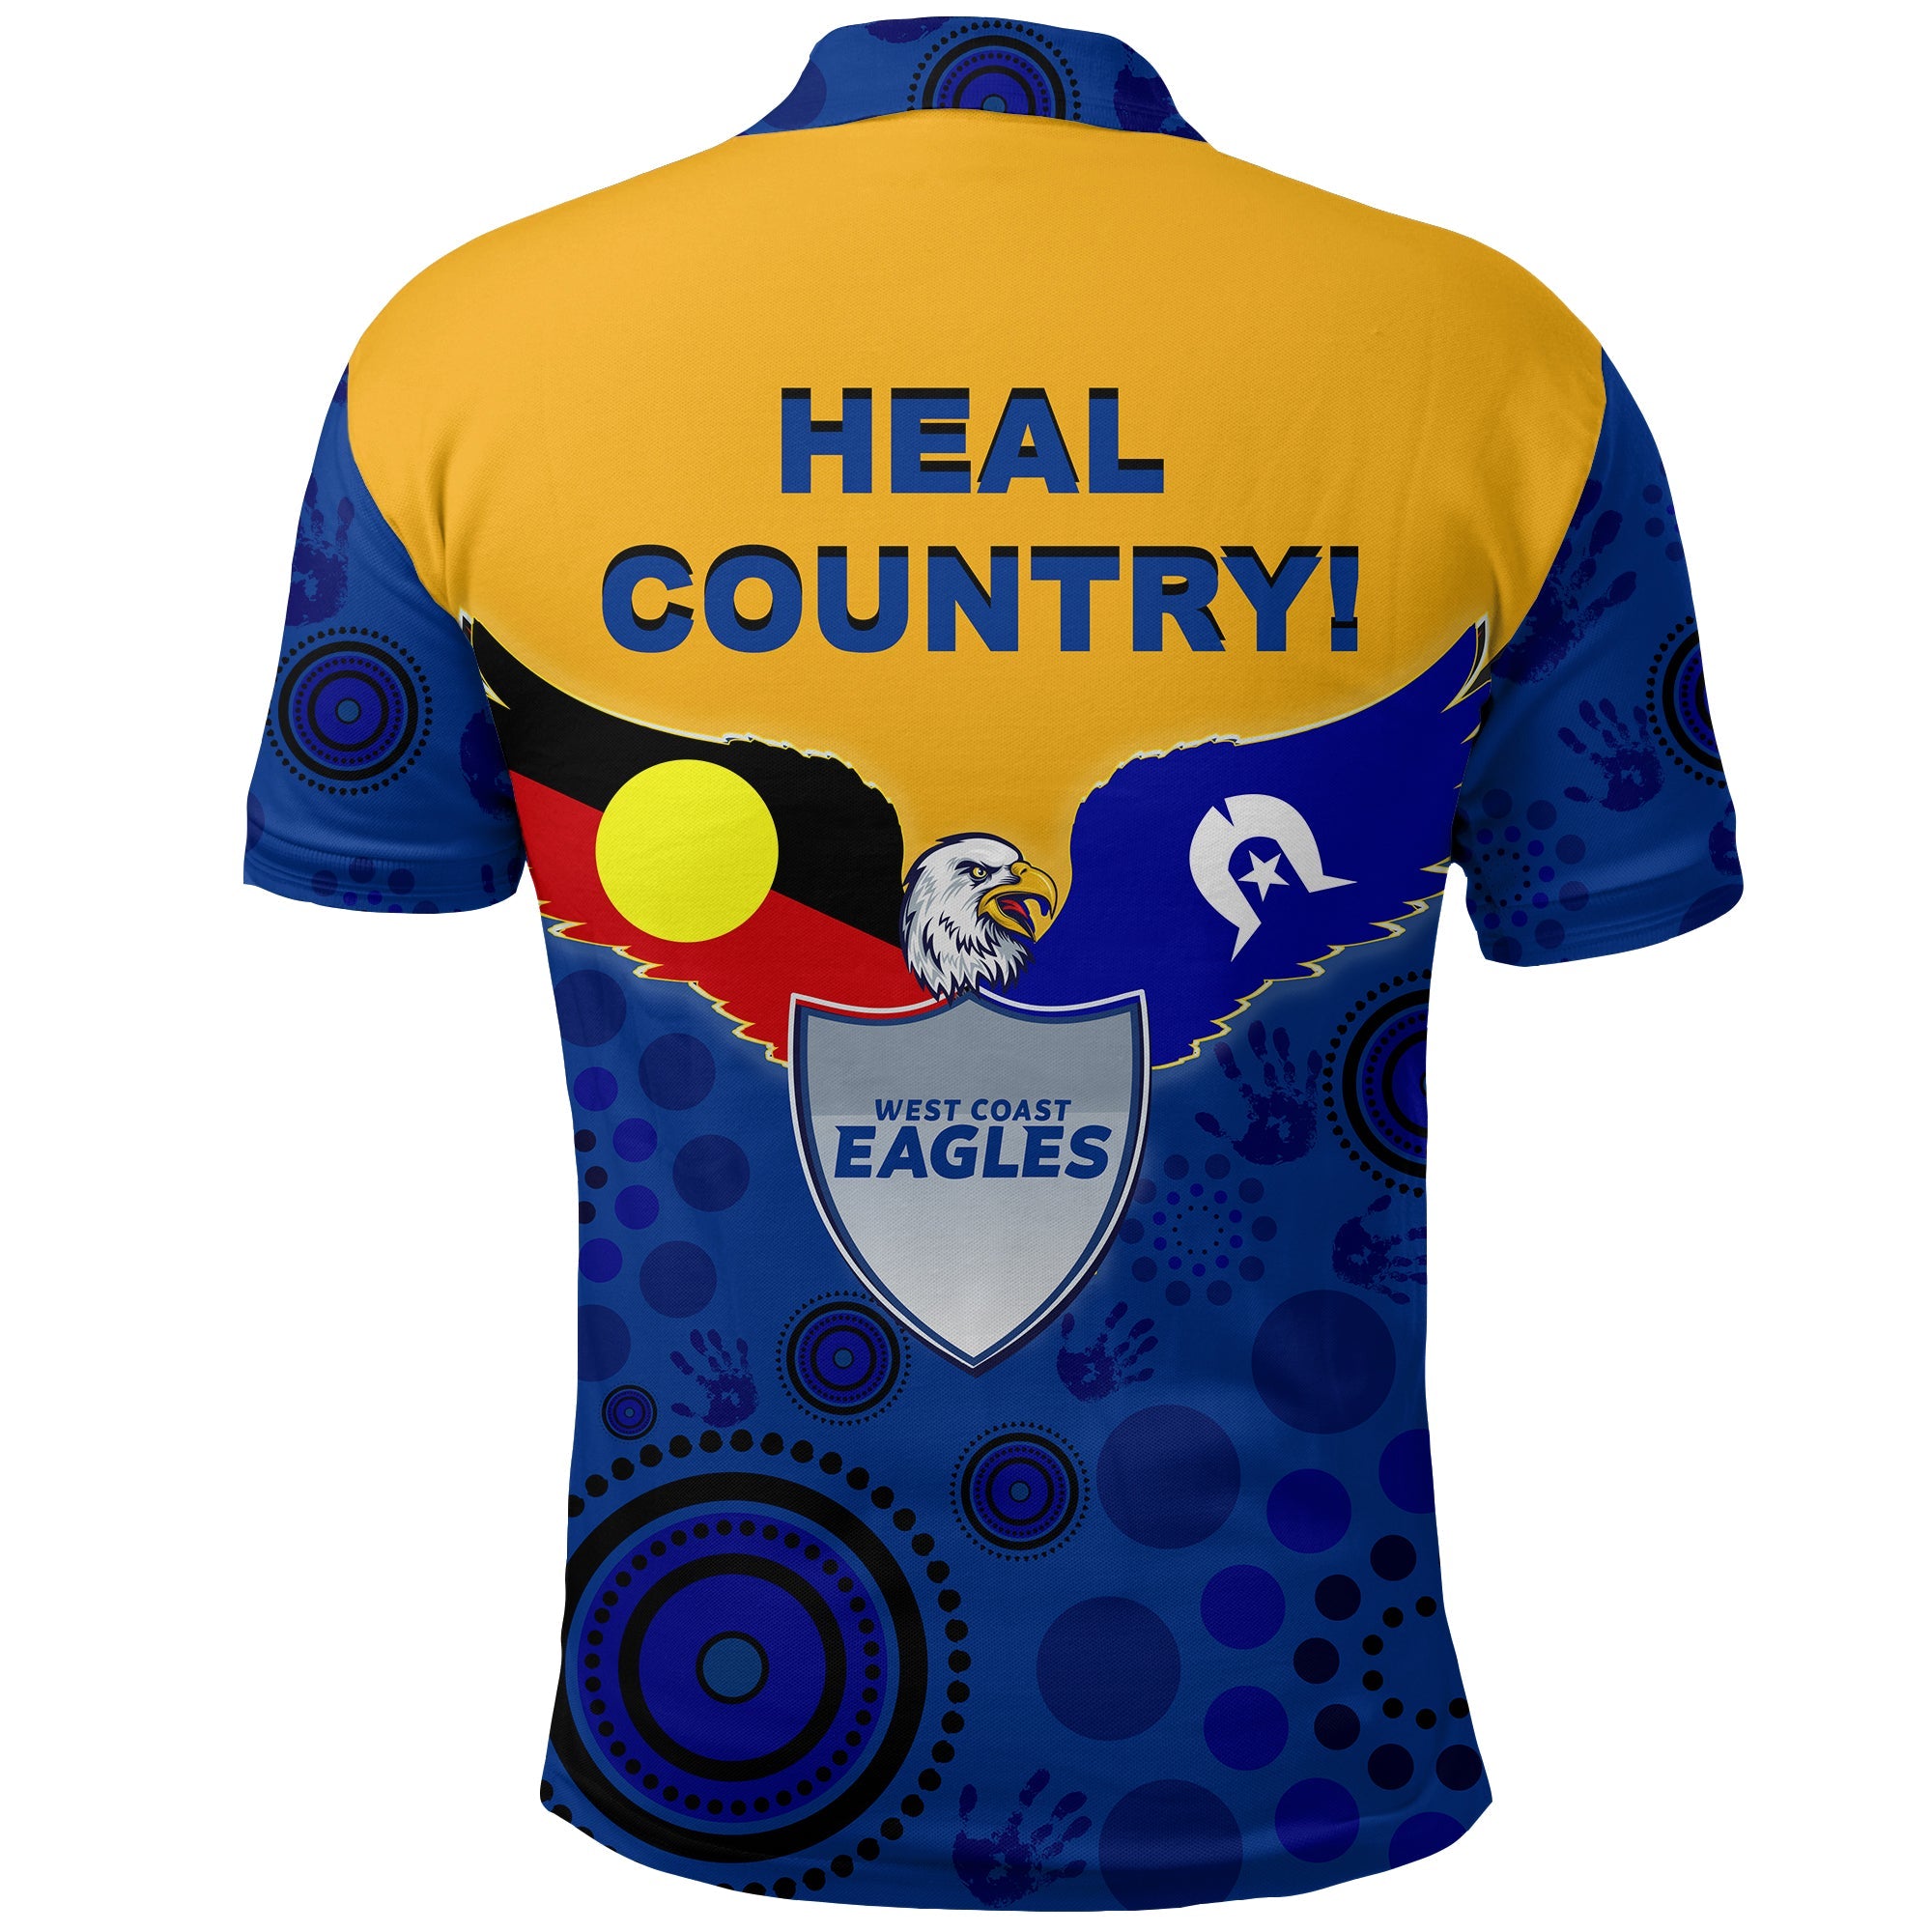 west-coast-eagles-polo-shirt-naidoc-heal-country-2021